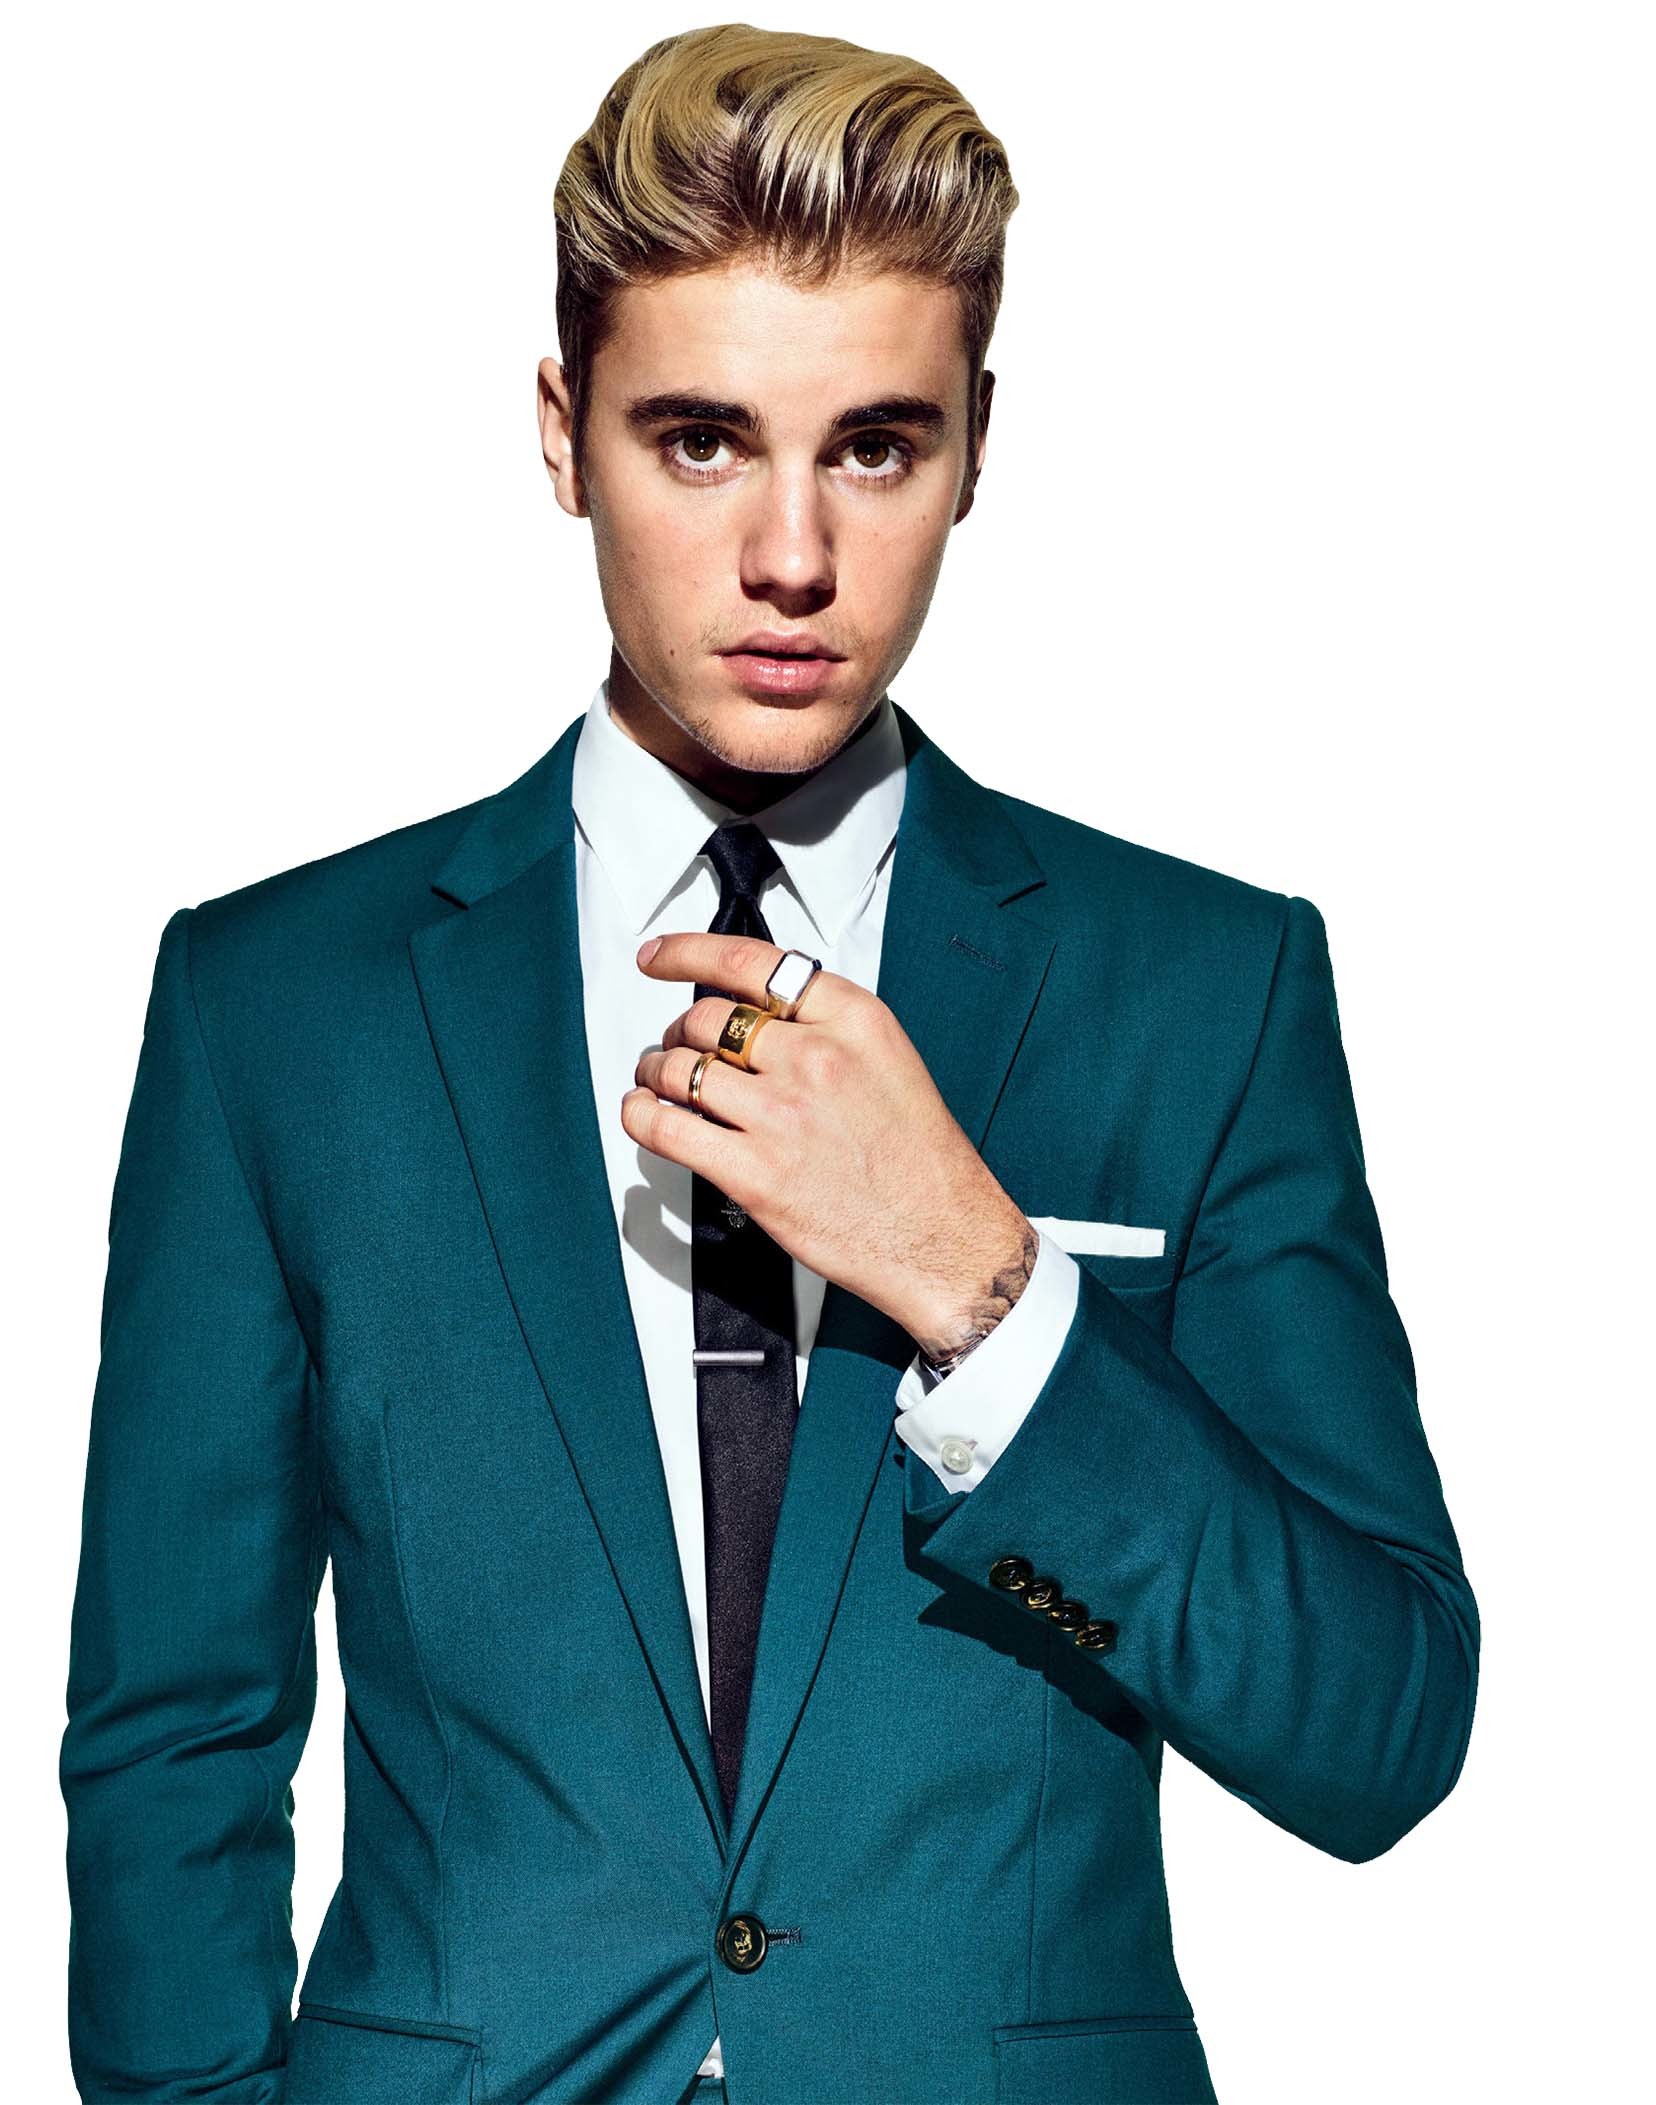 Justin Bieber HD Wallpaper Image